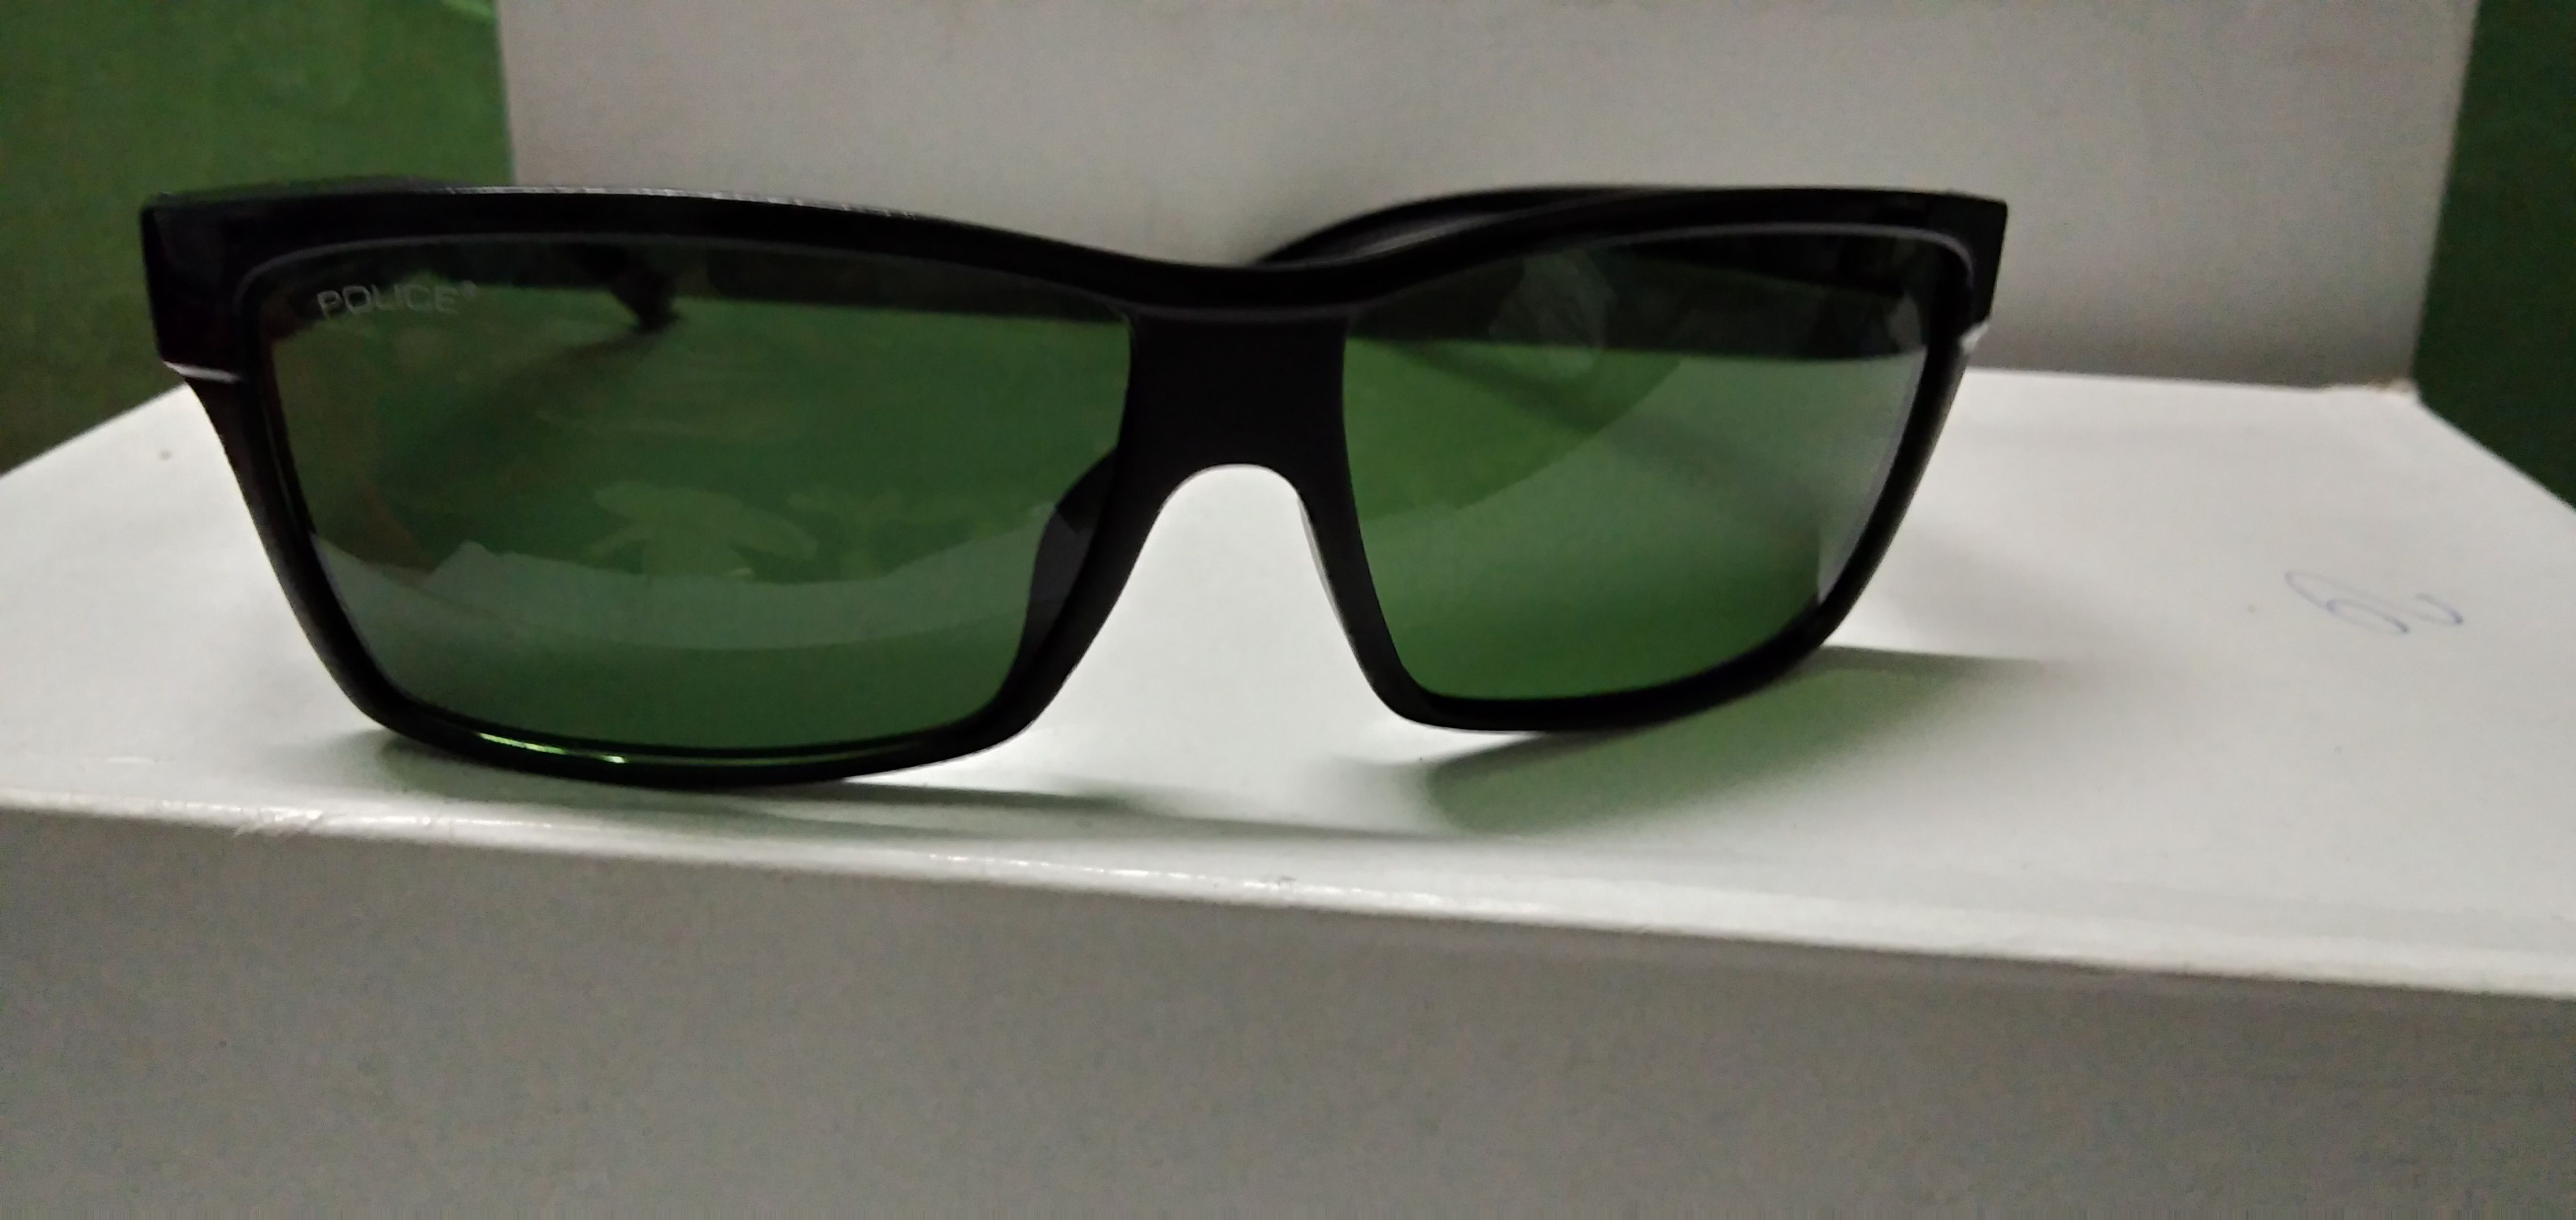 Police - Green Square Sunglasses ( sportt ) - Buy Police - Green Square ...